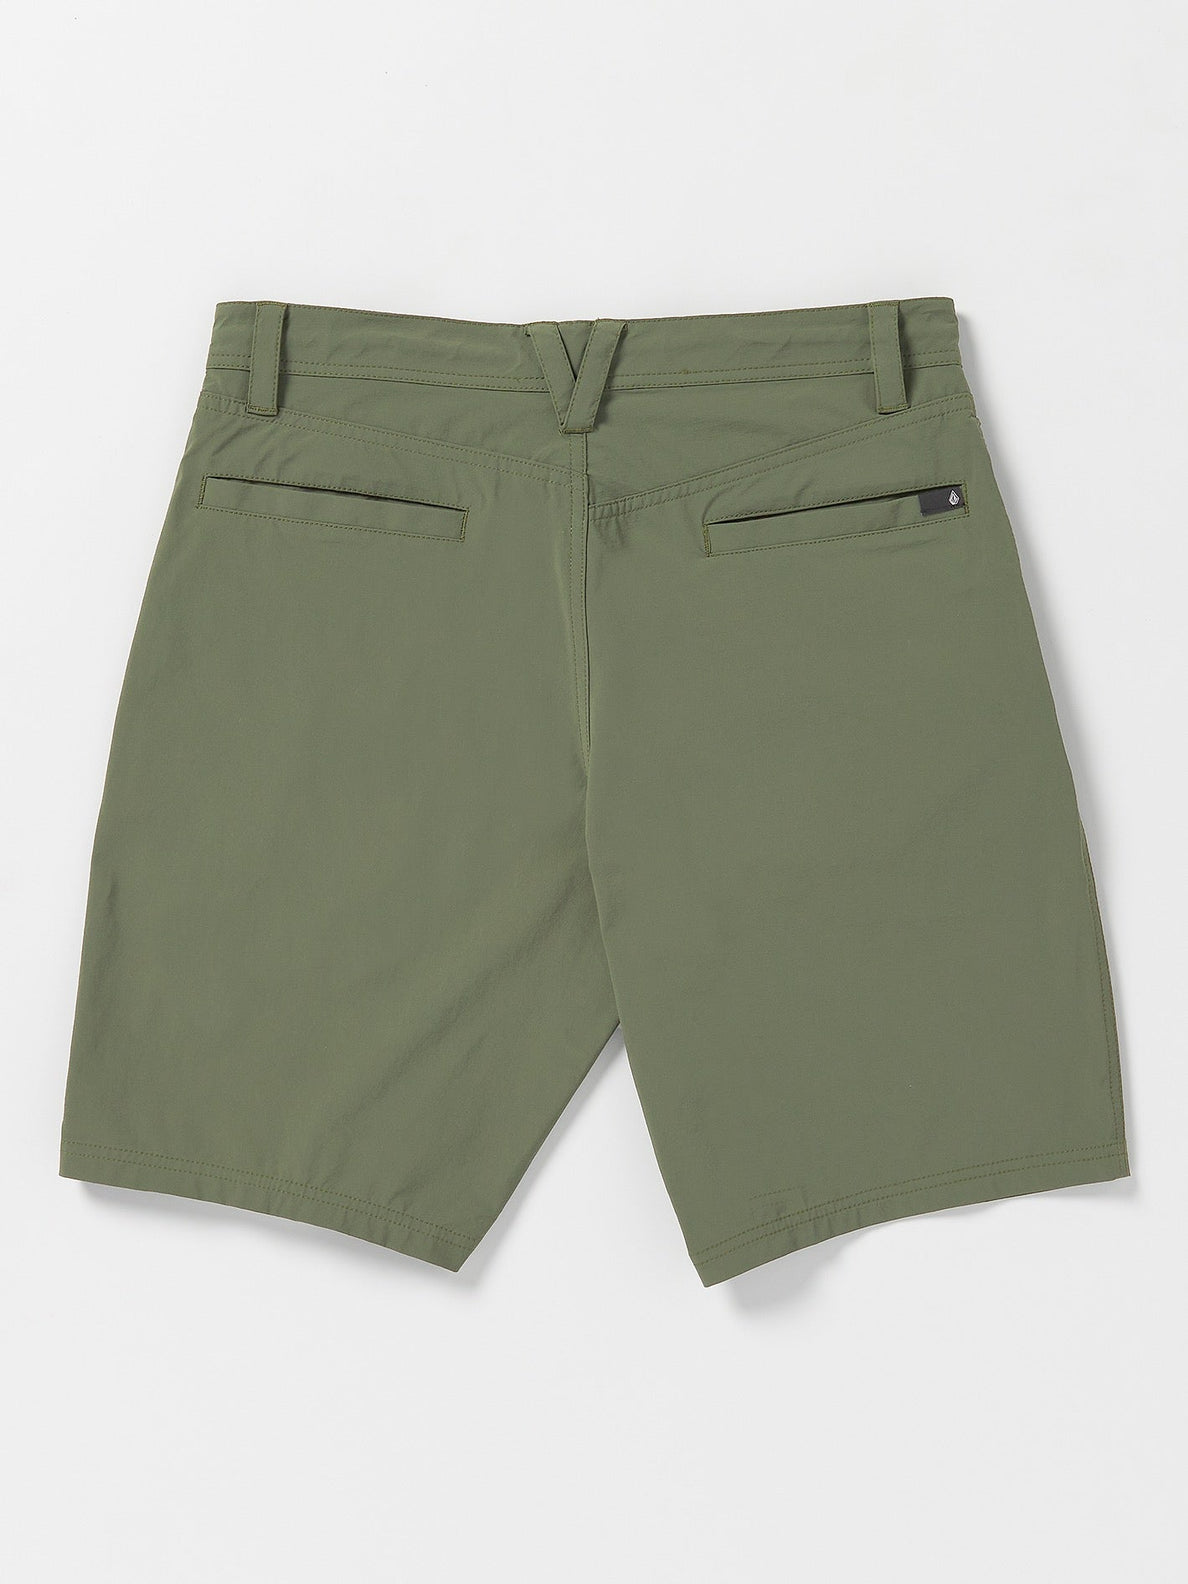 Voltripper Hybrid Shorts - Squadron Green